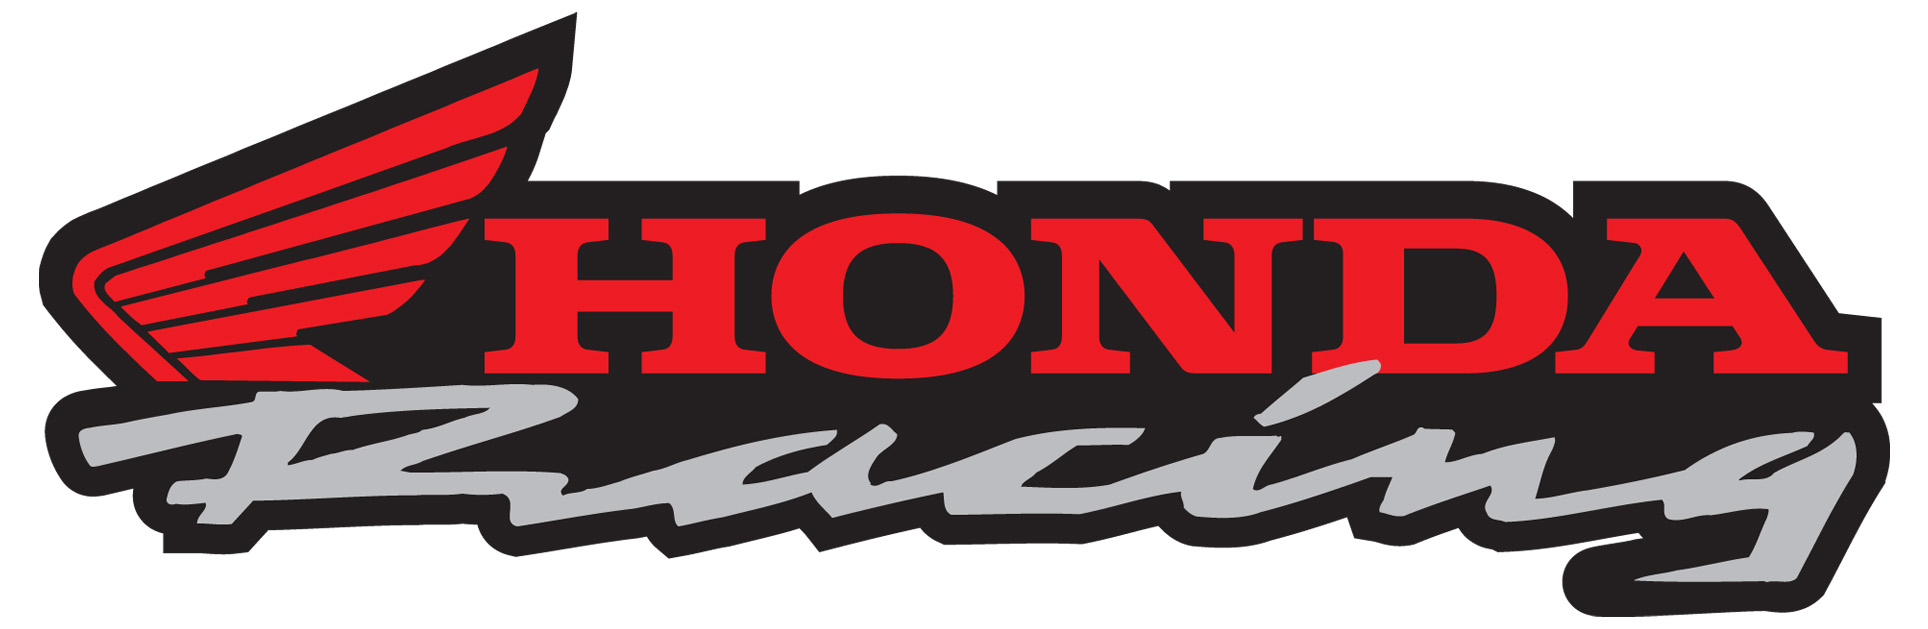 Honda Racing Wallpapers Group